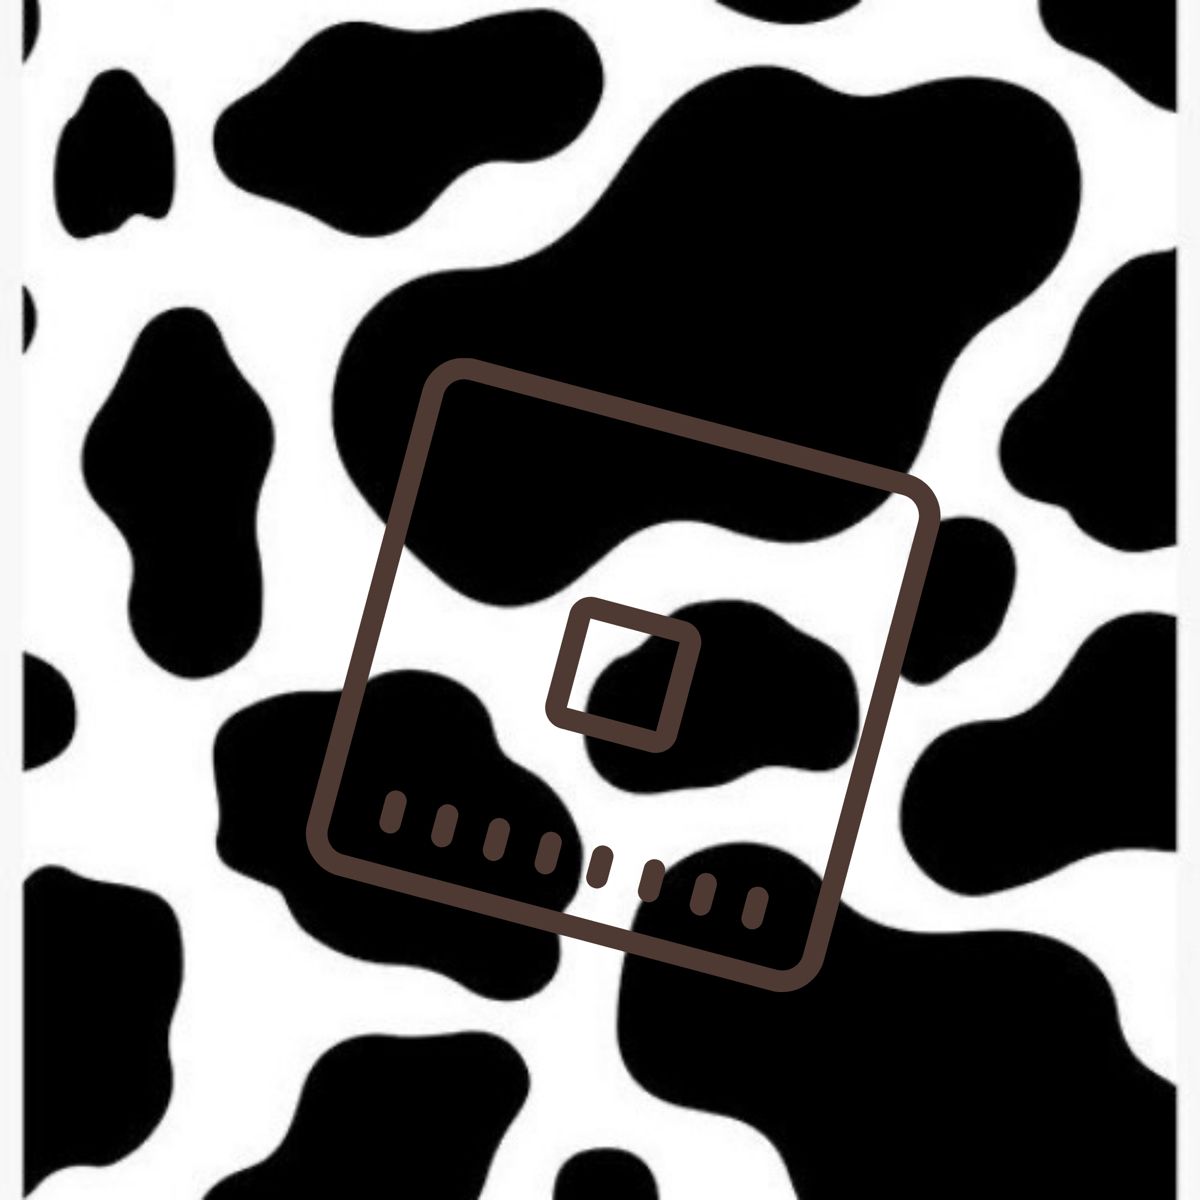 Roblox cow app icon. App icon, iPhone prints, Ios app icon design